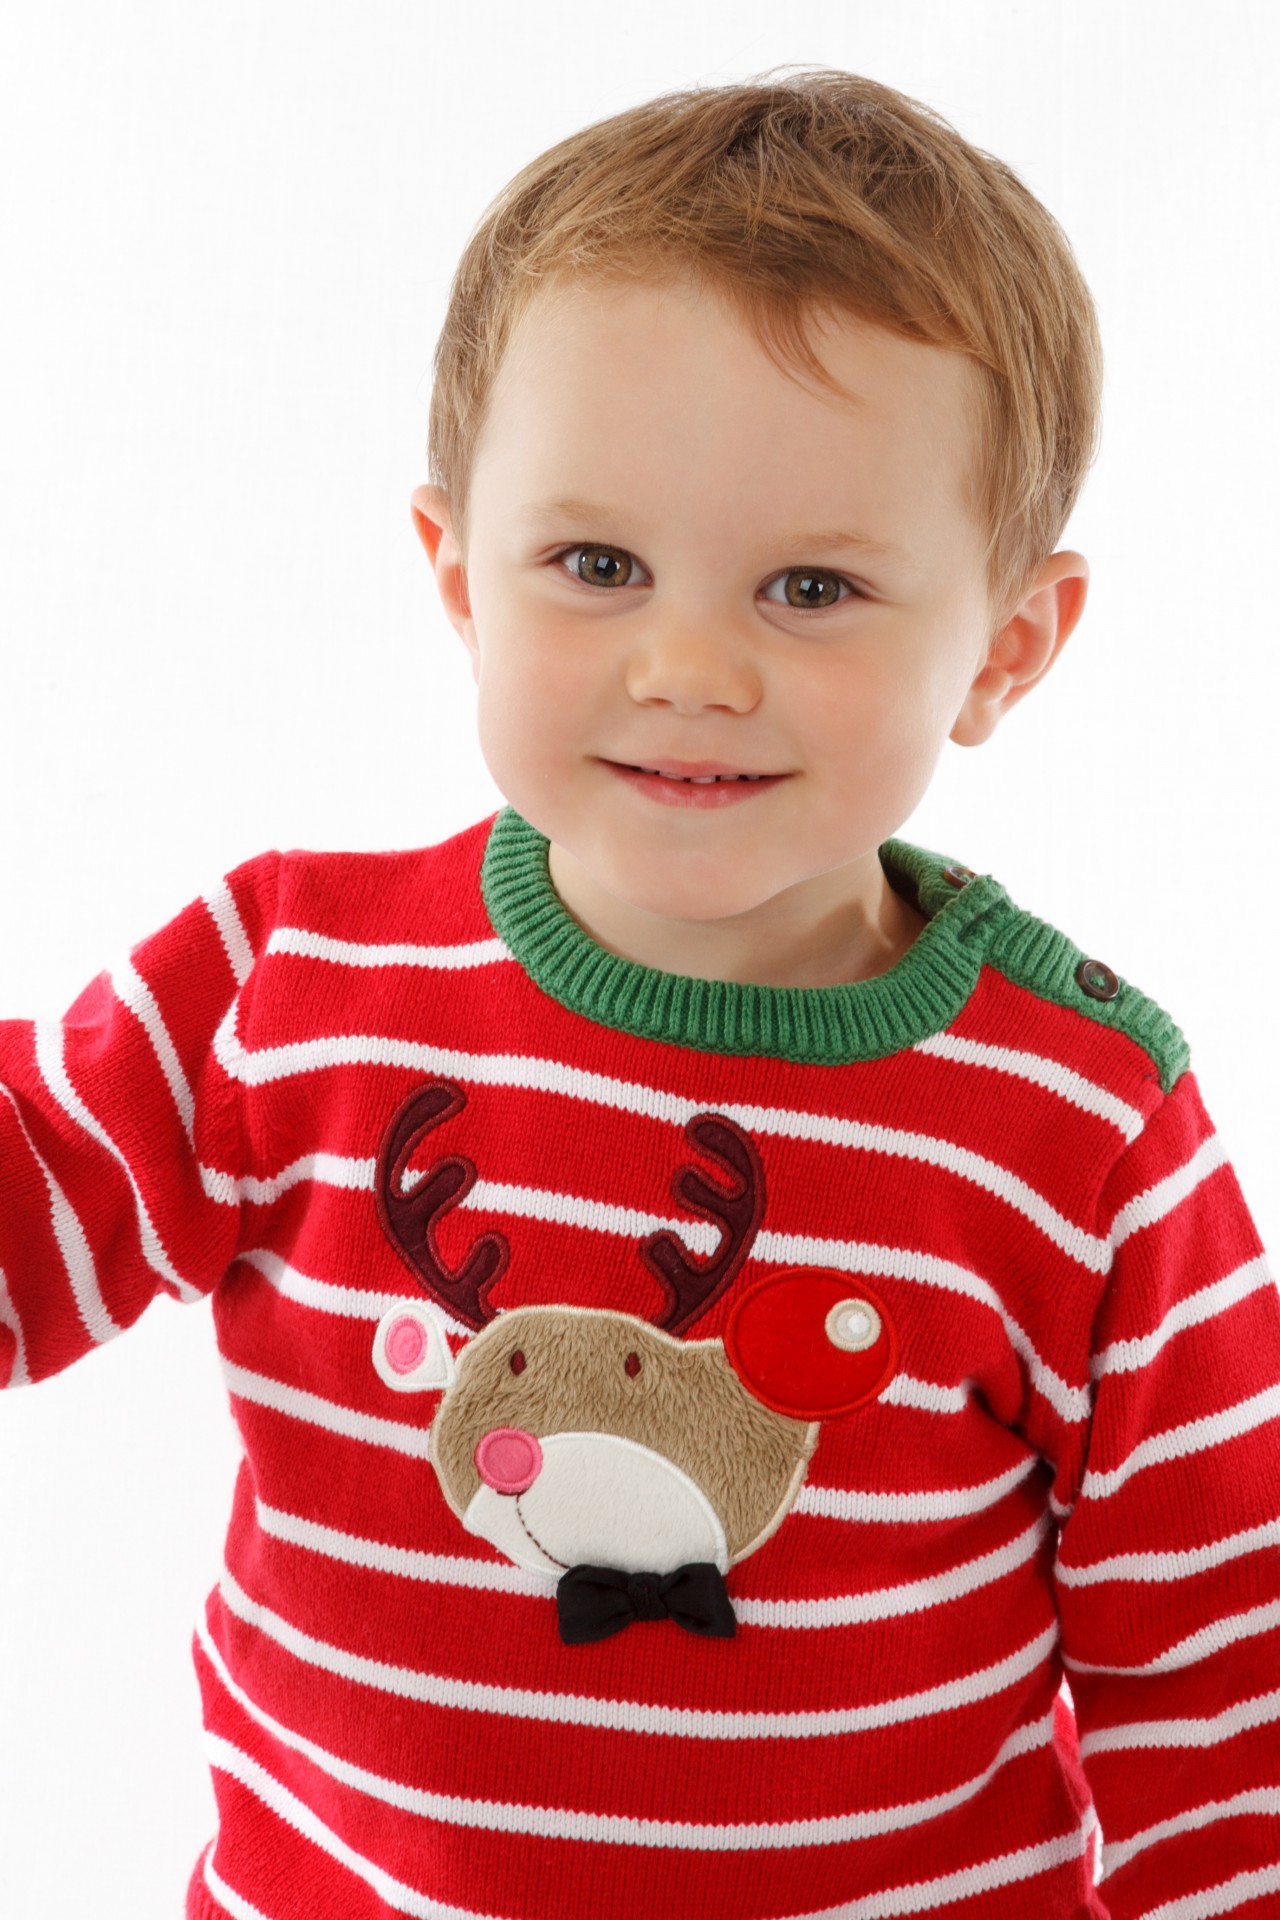 Little Boy In Christmas Sweater Free Stock Photo - Public Domain ...